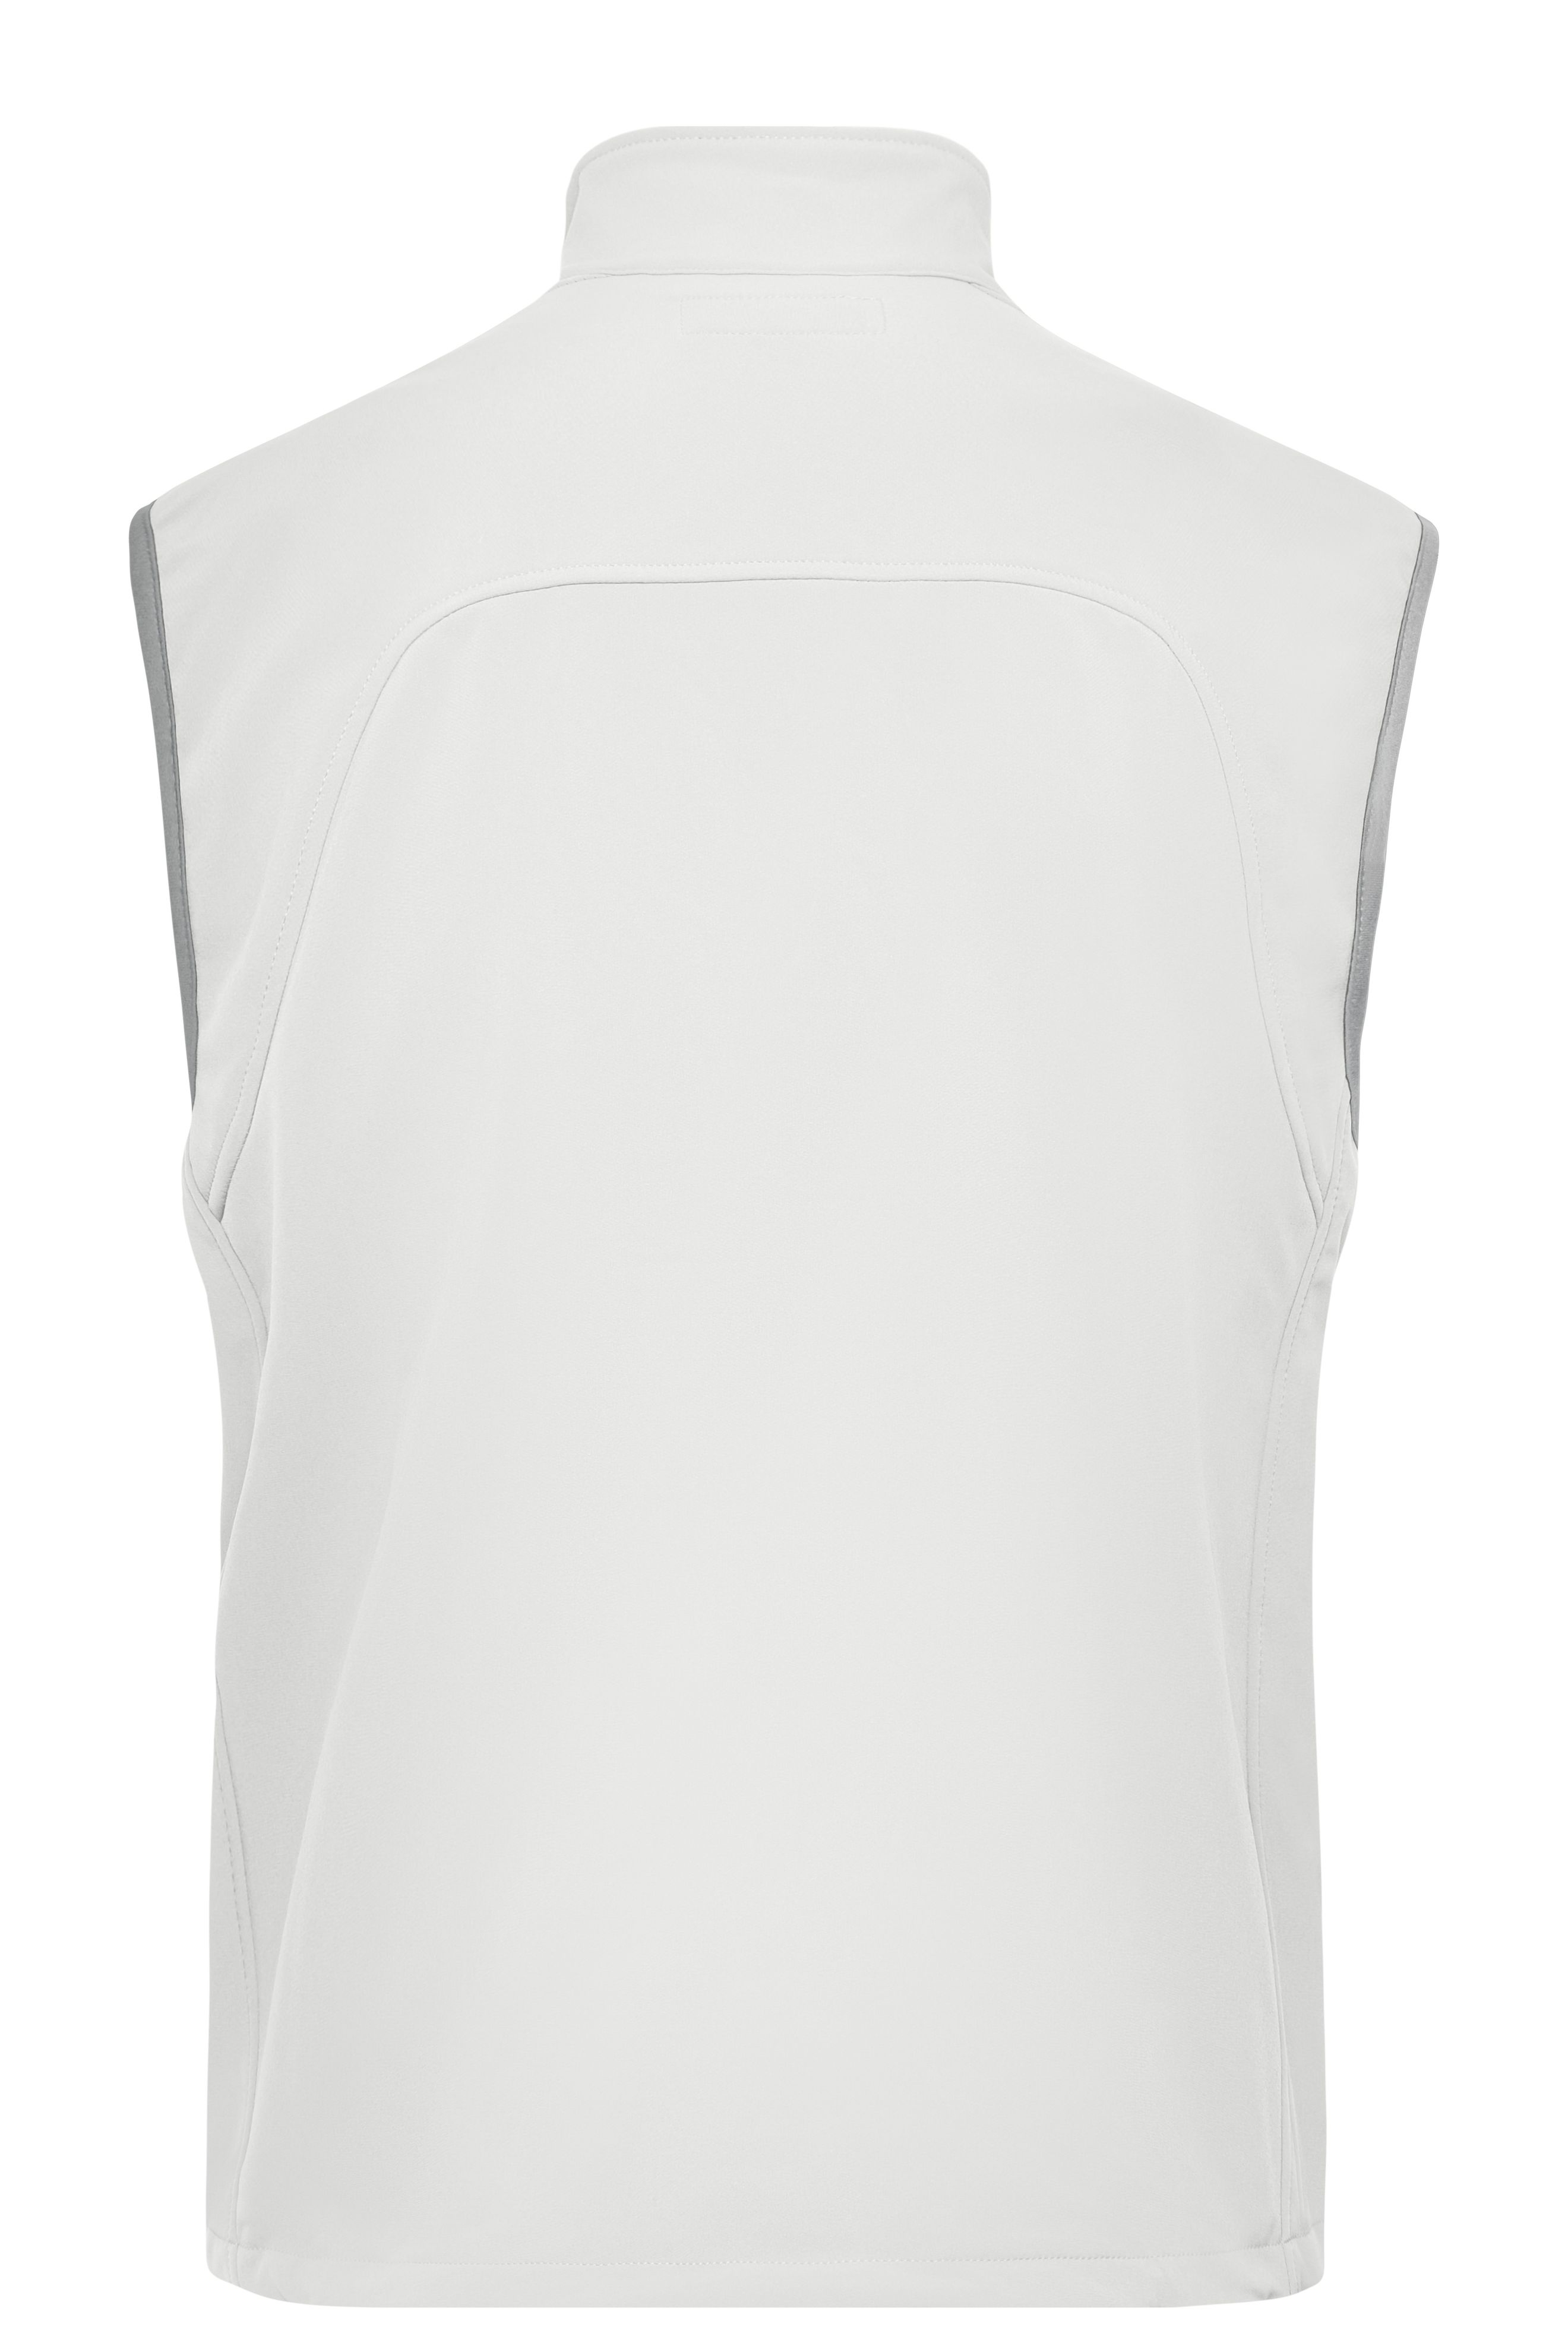 Men's Softshell Vest JN136 Trendige Weste aus Softshell